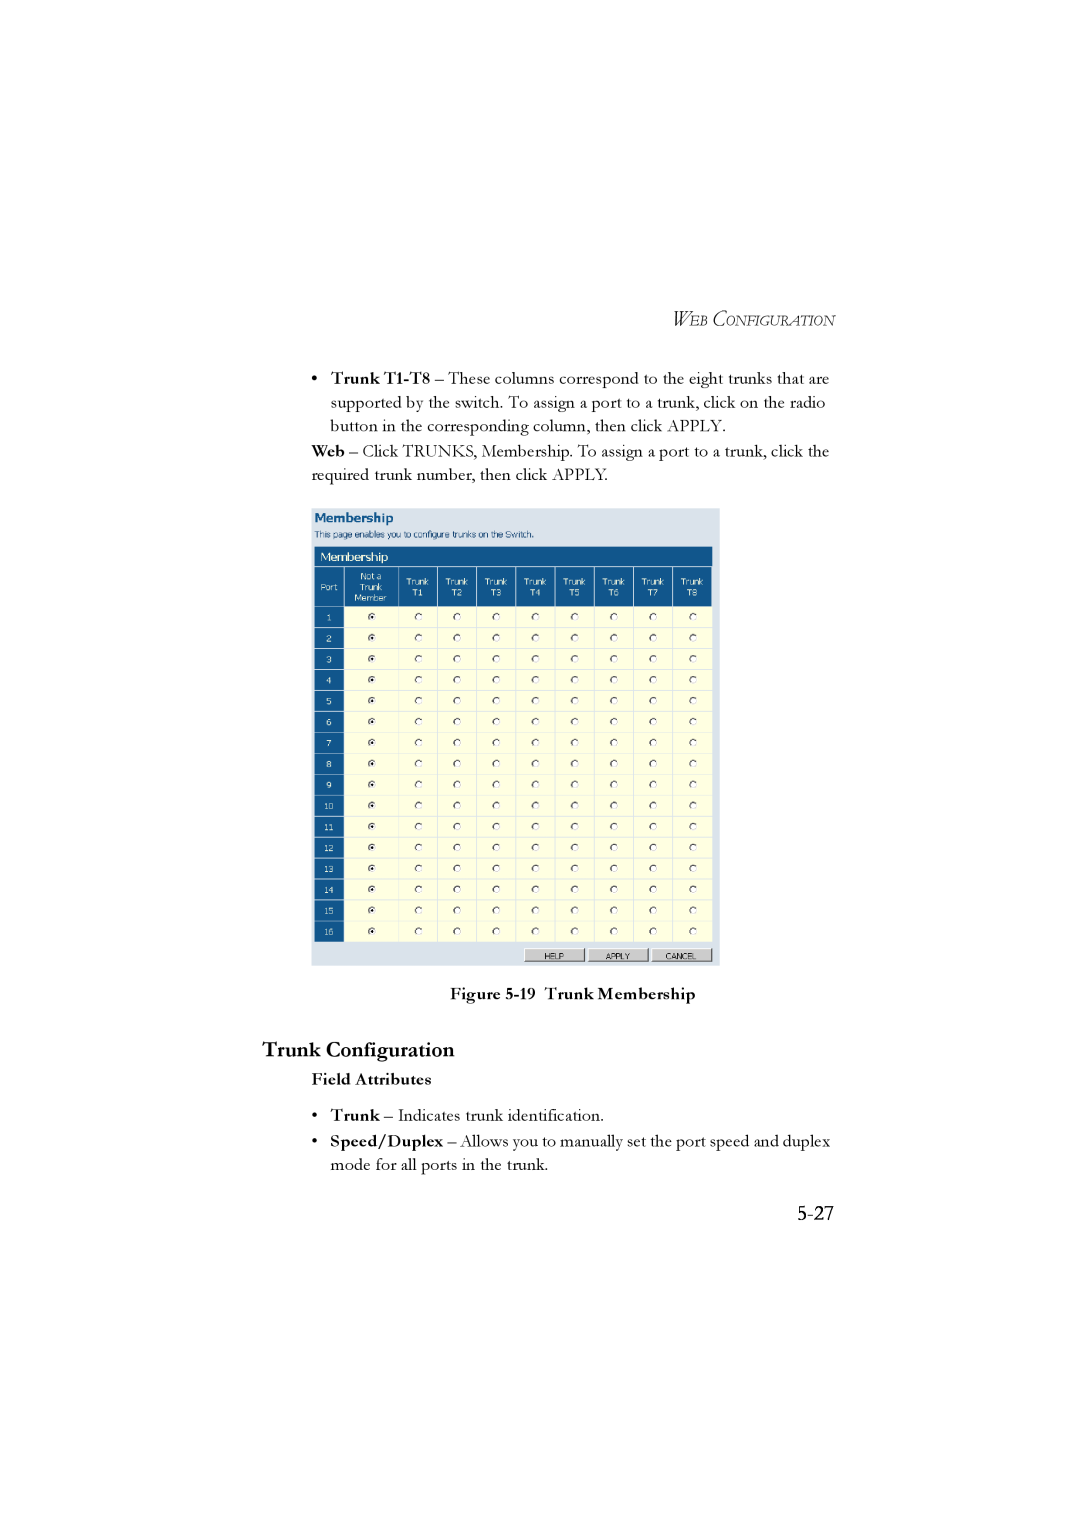 LevelOne GSW-2476 user manual 5-27, Trunk Configuration, 19 Trunk Membership, Field Attributes 